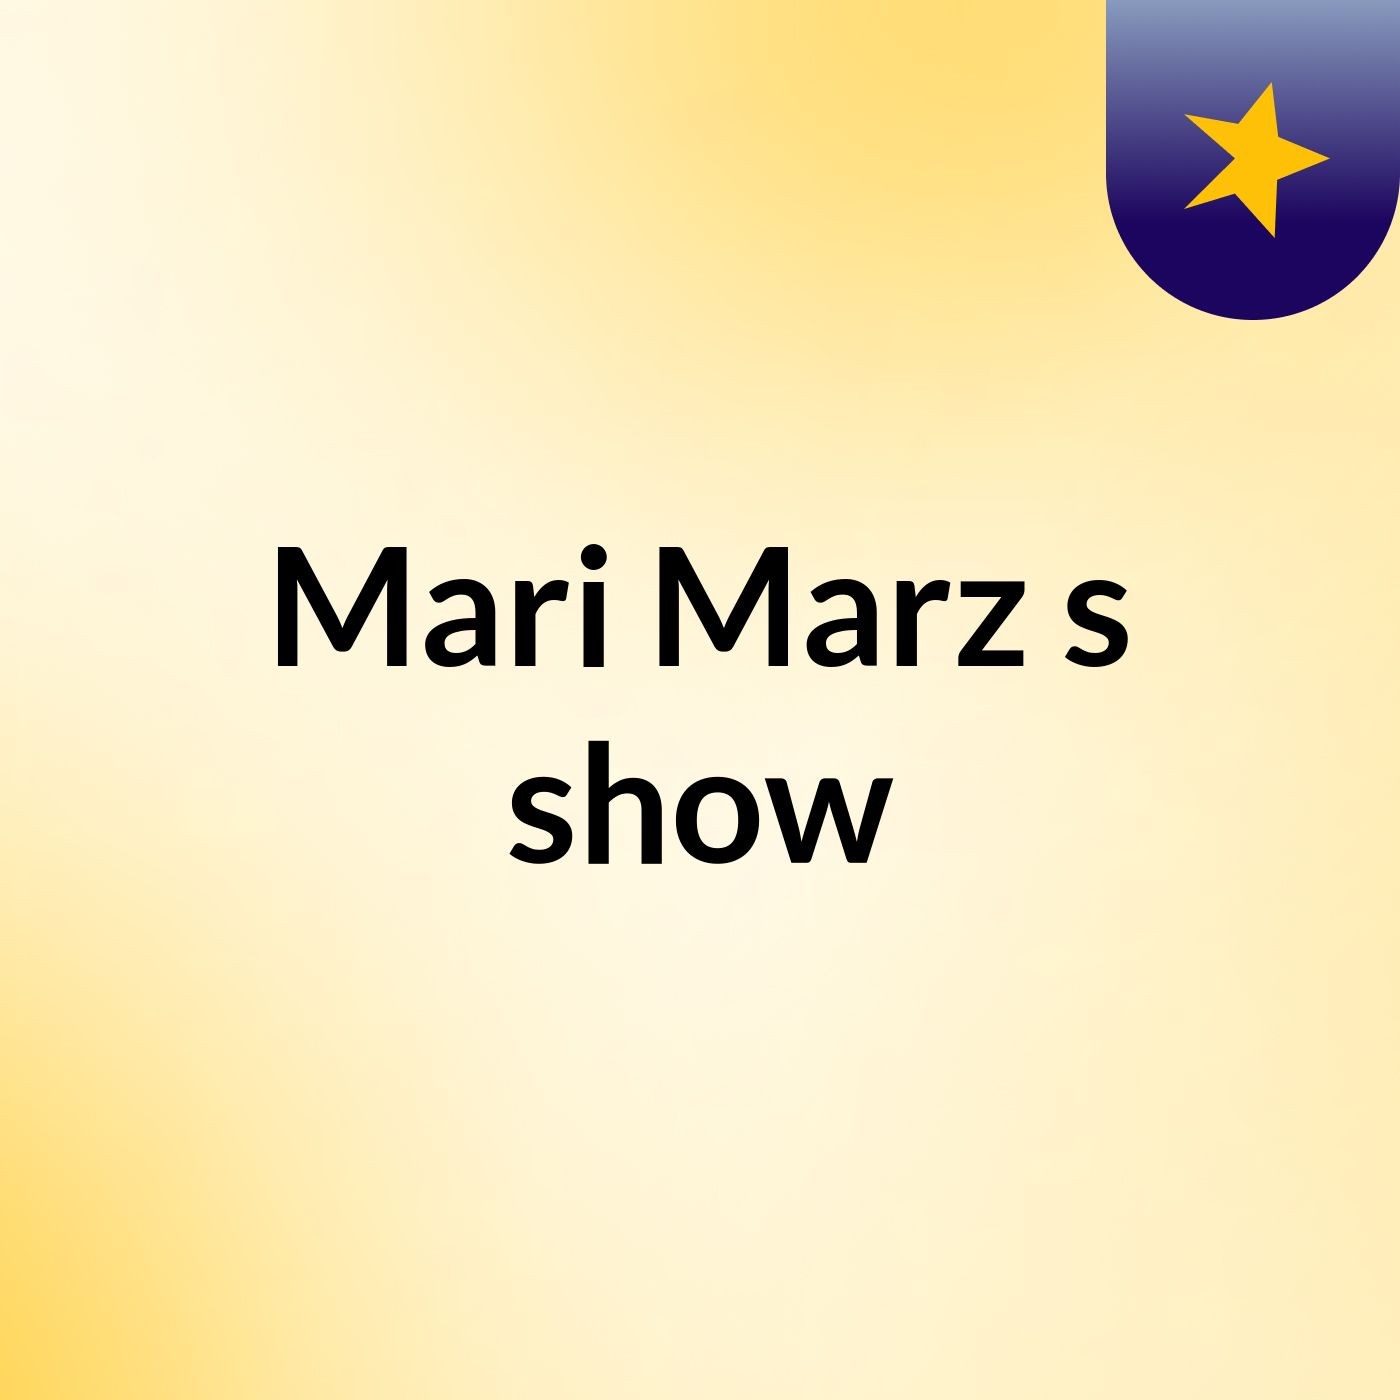 Mari Marz's show